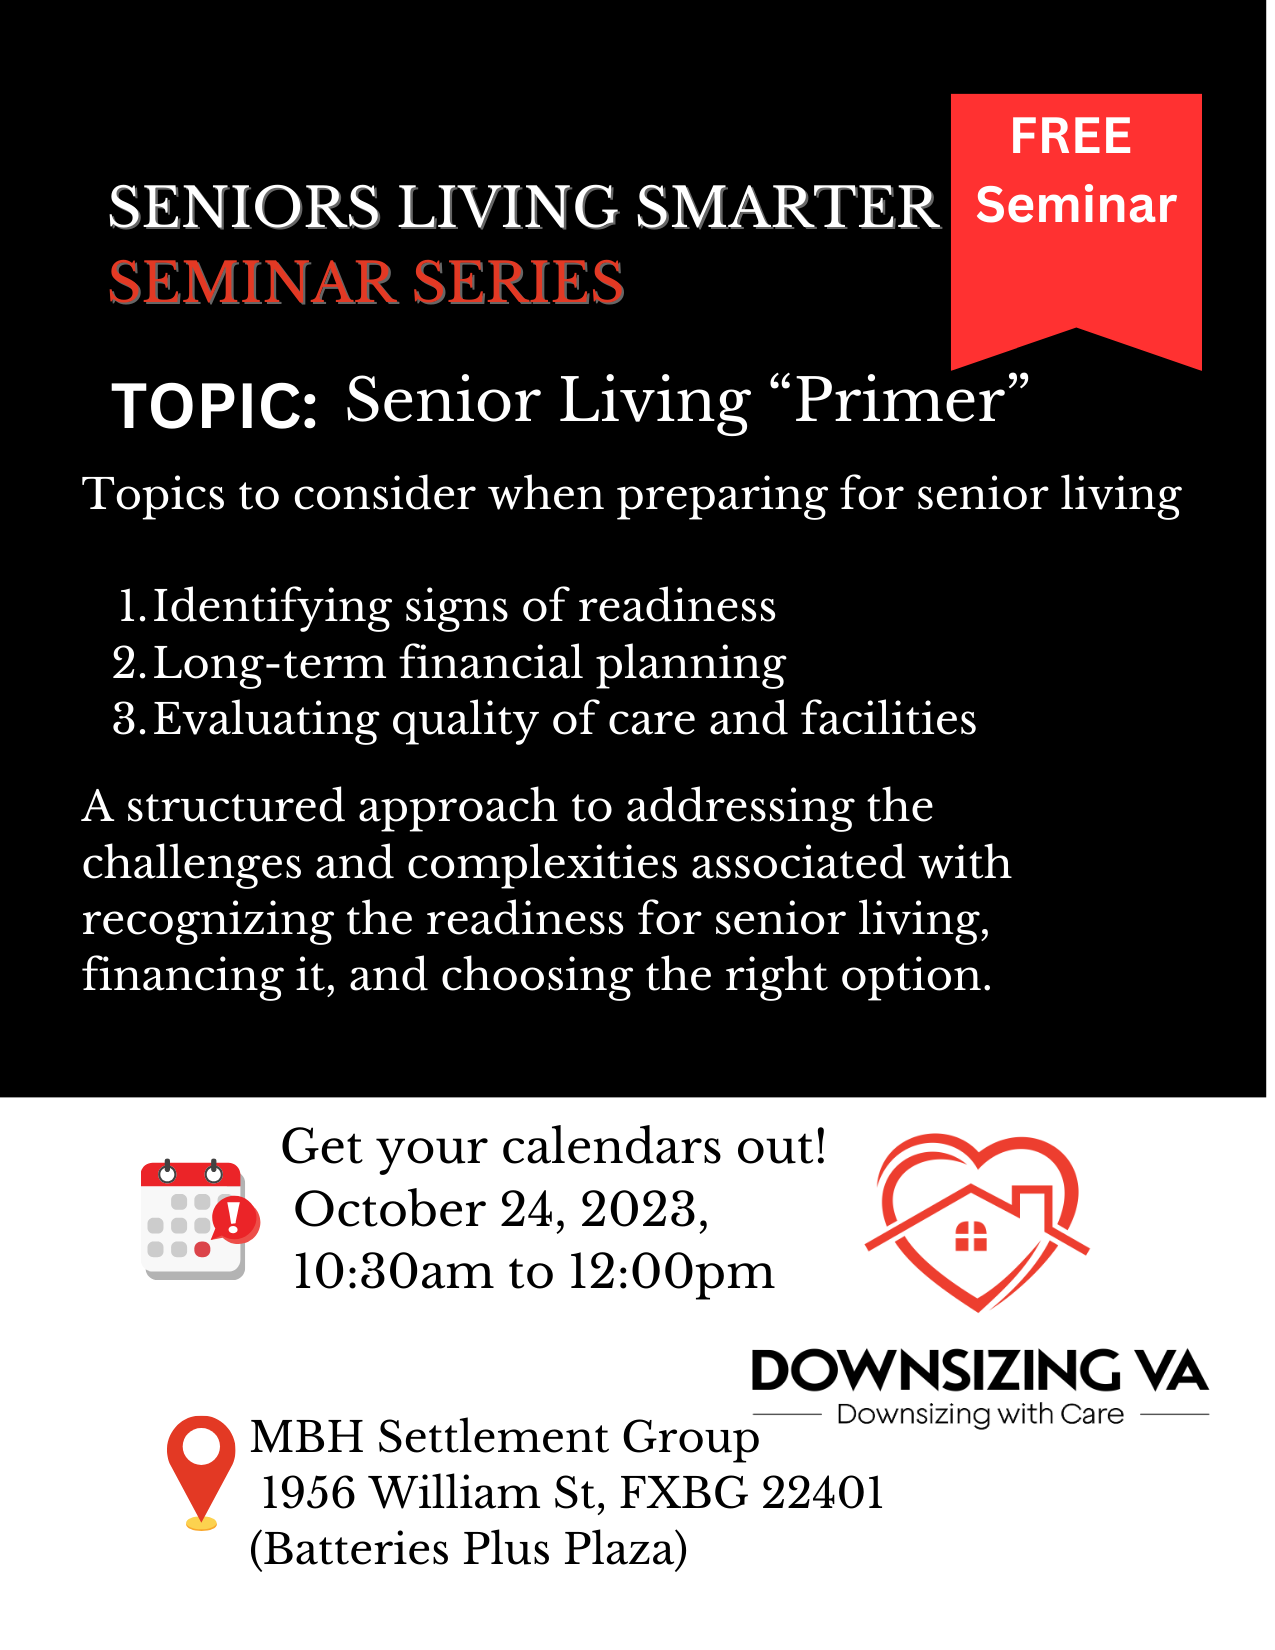 Senior Living “Primer” Seminar Oct 24th Call today to register at 540-834-8412